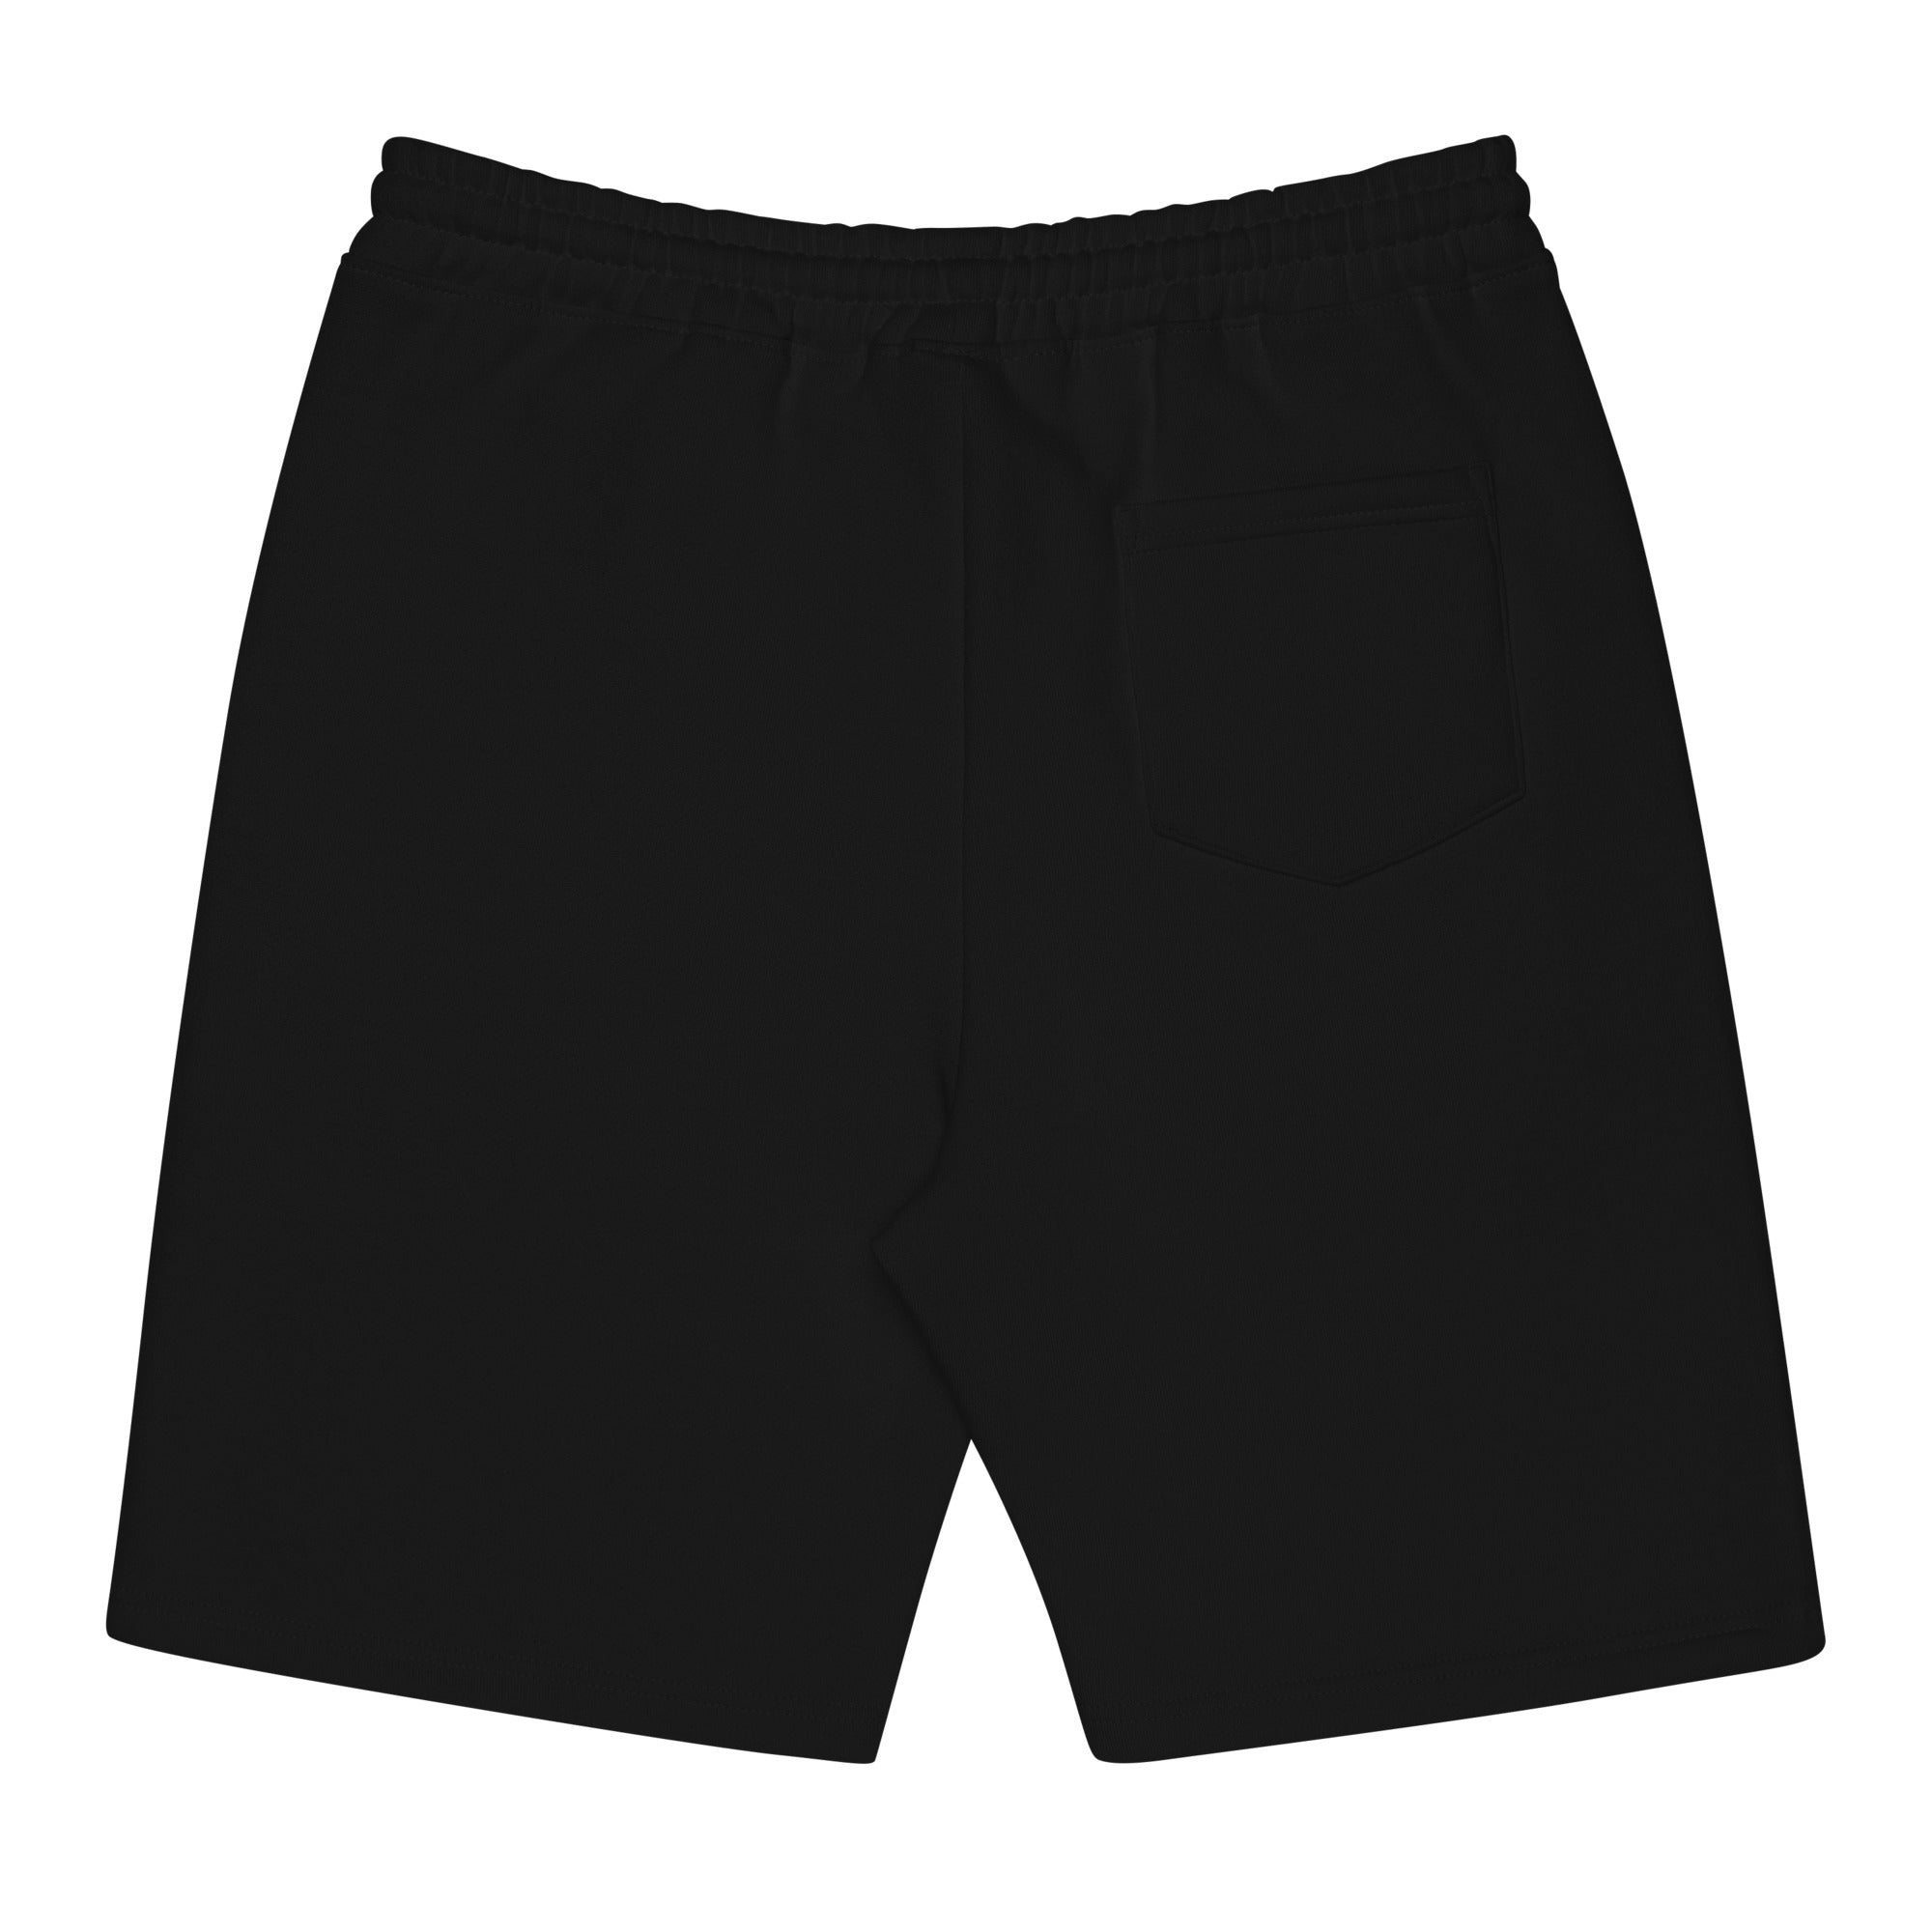 YB Goode Signature fleece shorts (black)